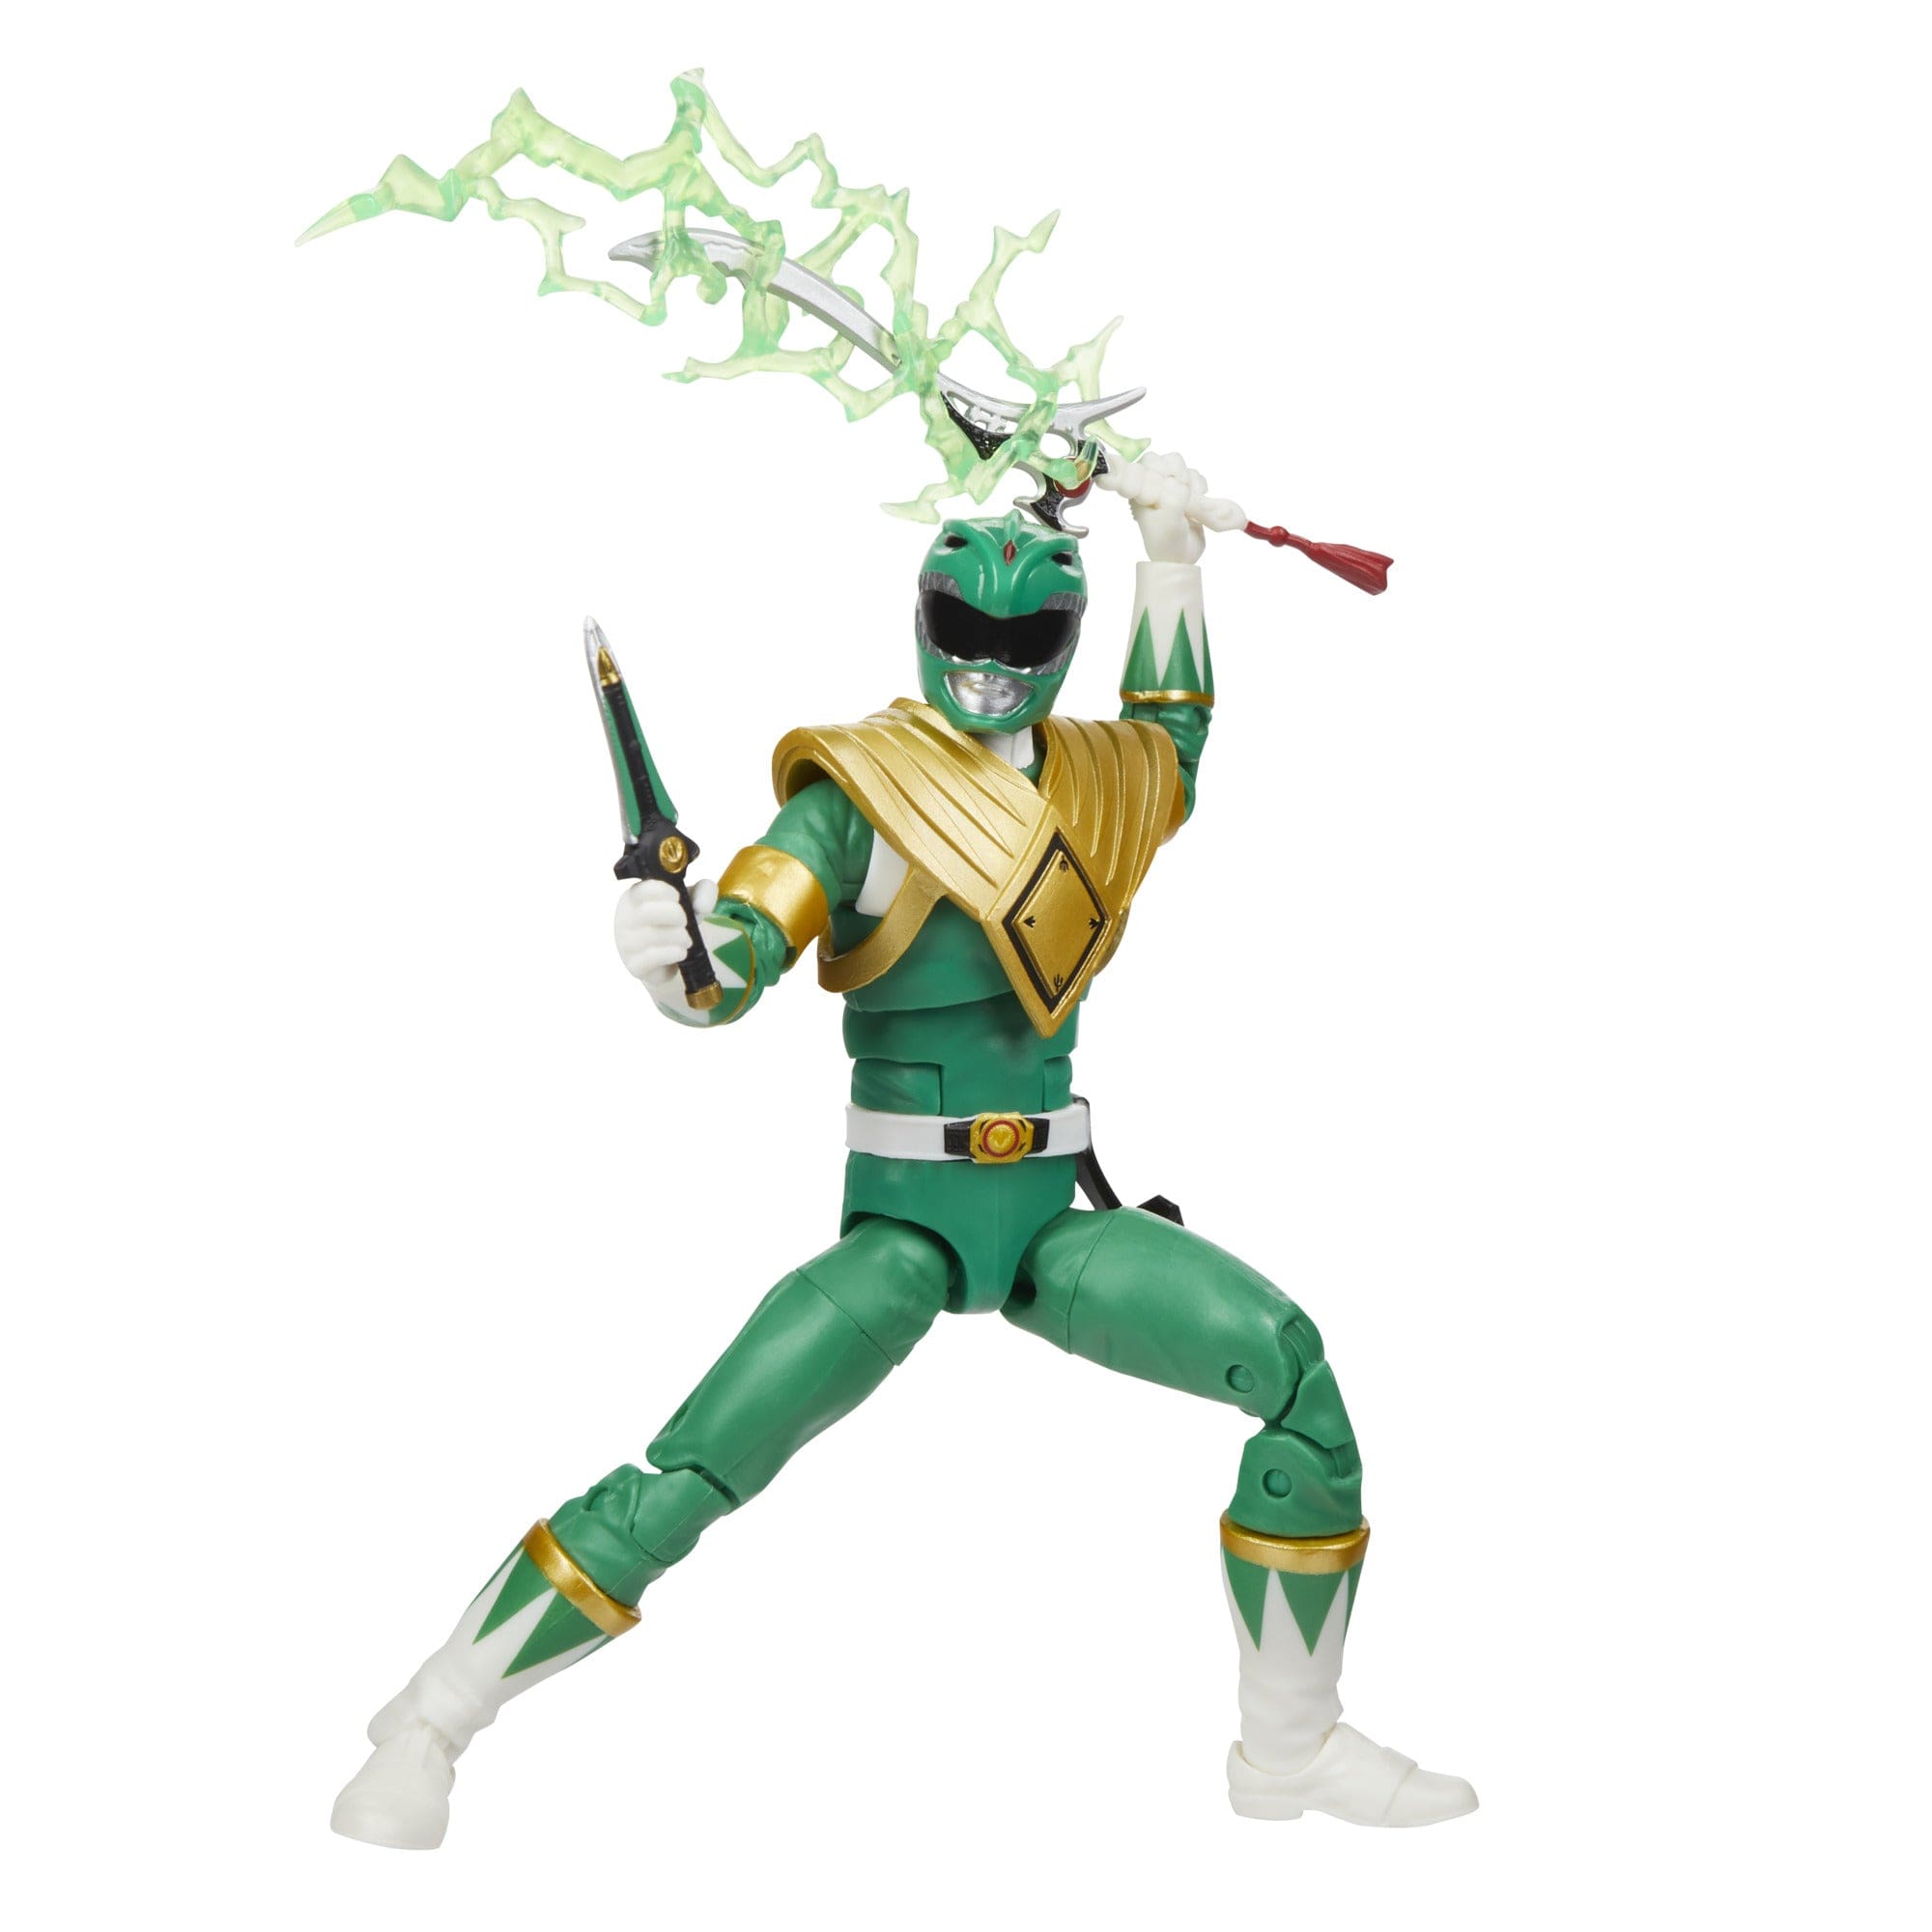 Original Power Rangers WILD FORCE GREEN Action Figure Toy